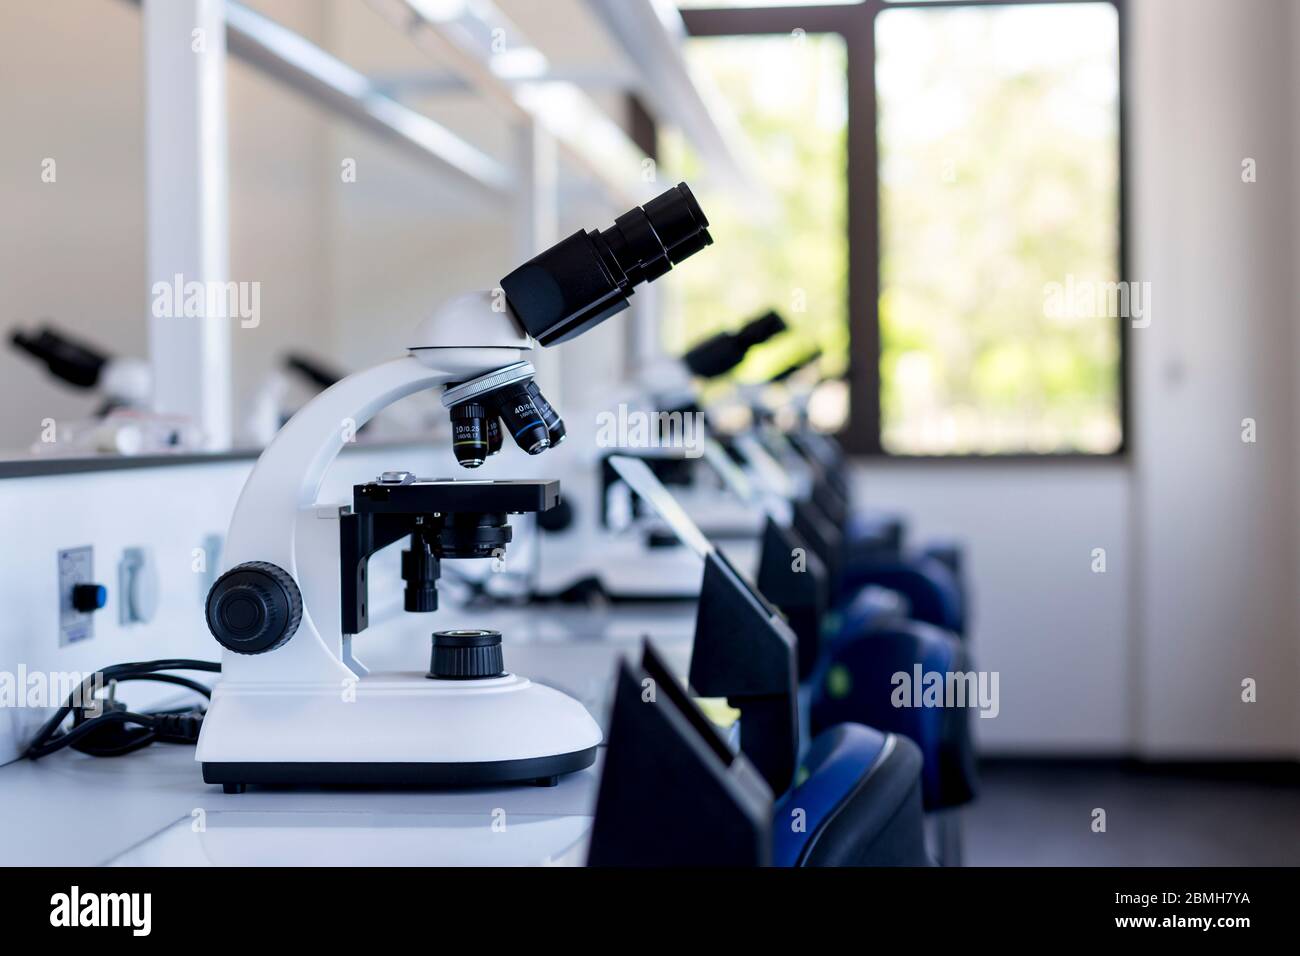 4-lens microscope in a laboratory Stock Photo